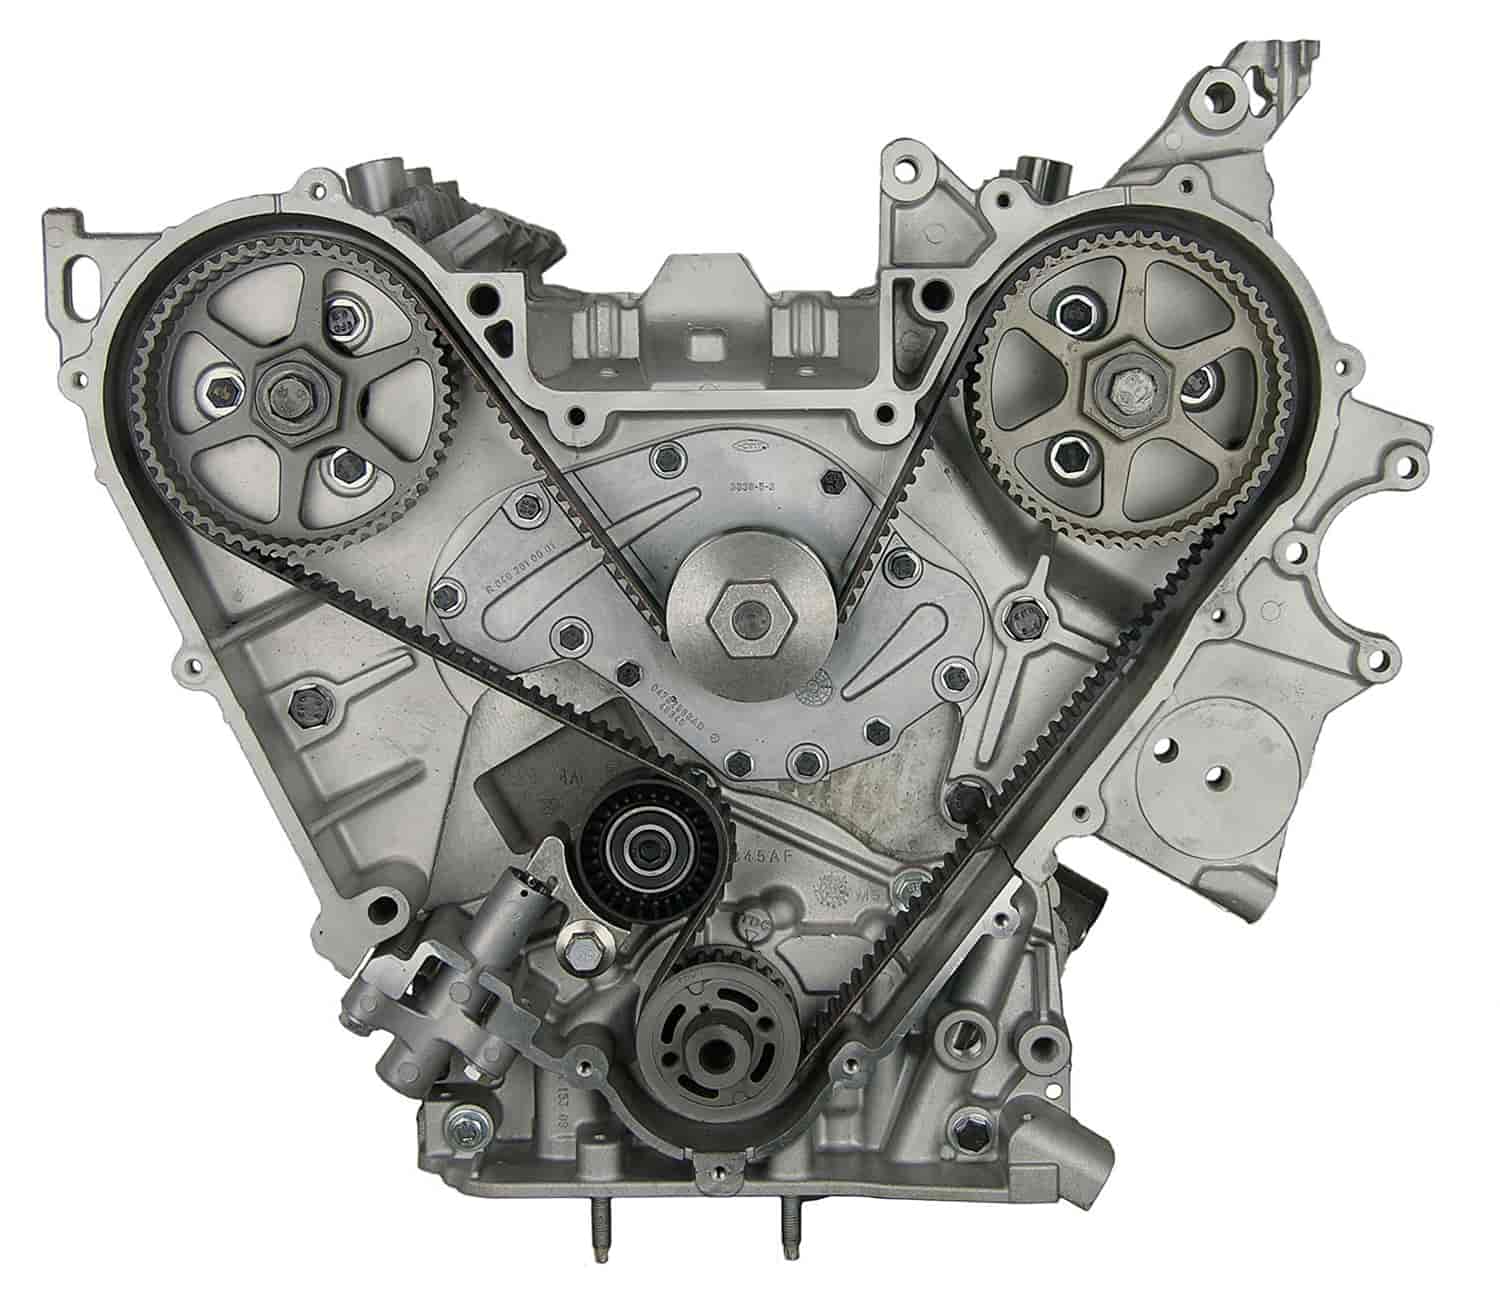 Remanufactured Crate Engine for 2007-2010 Chrysler/Dodge with 3.5L V6